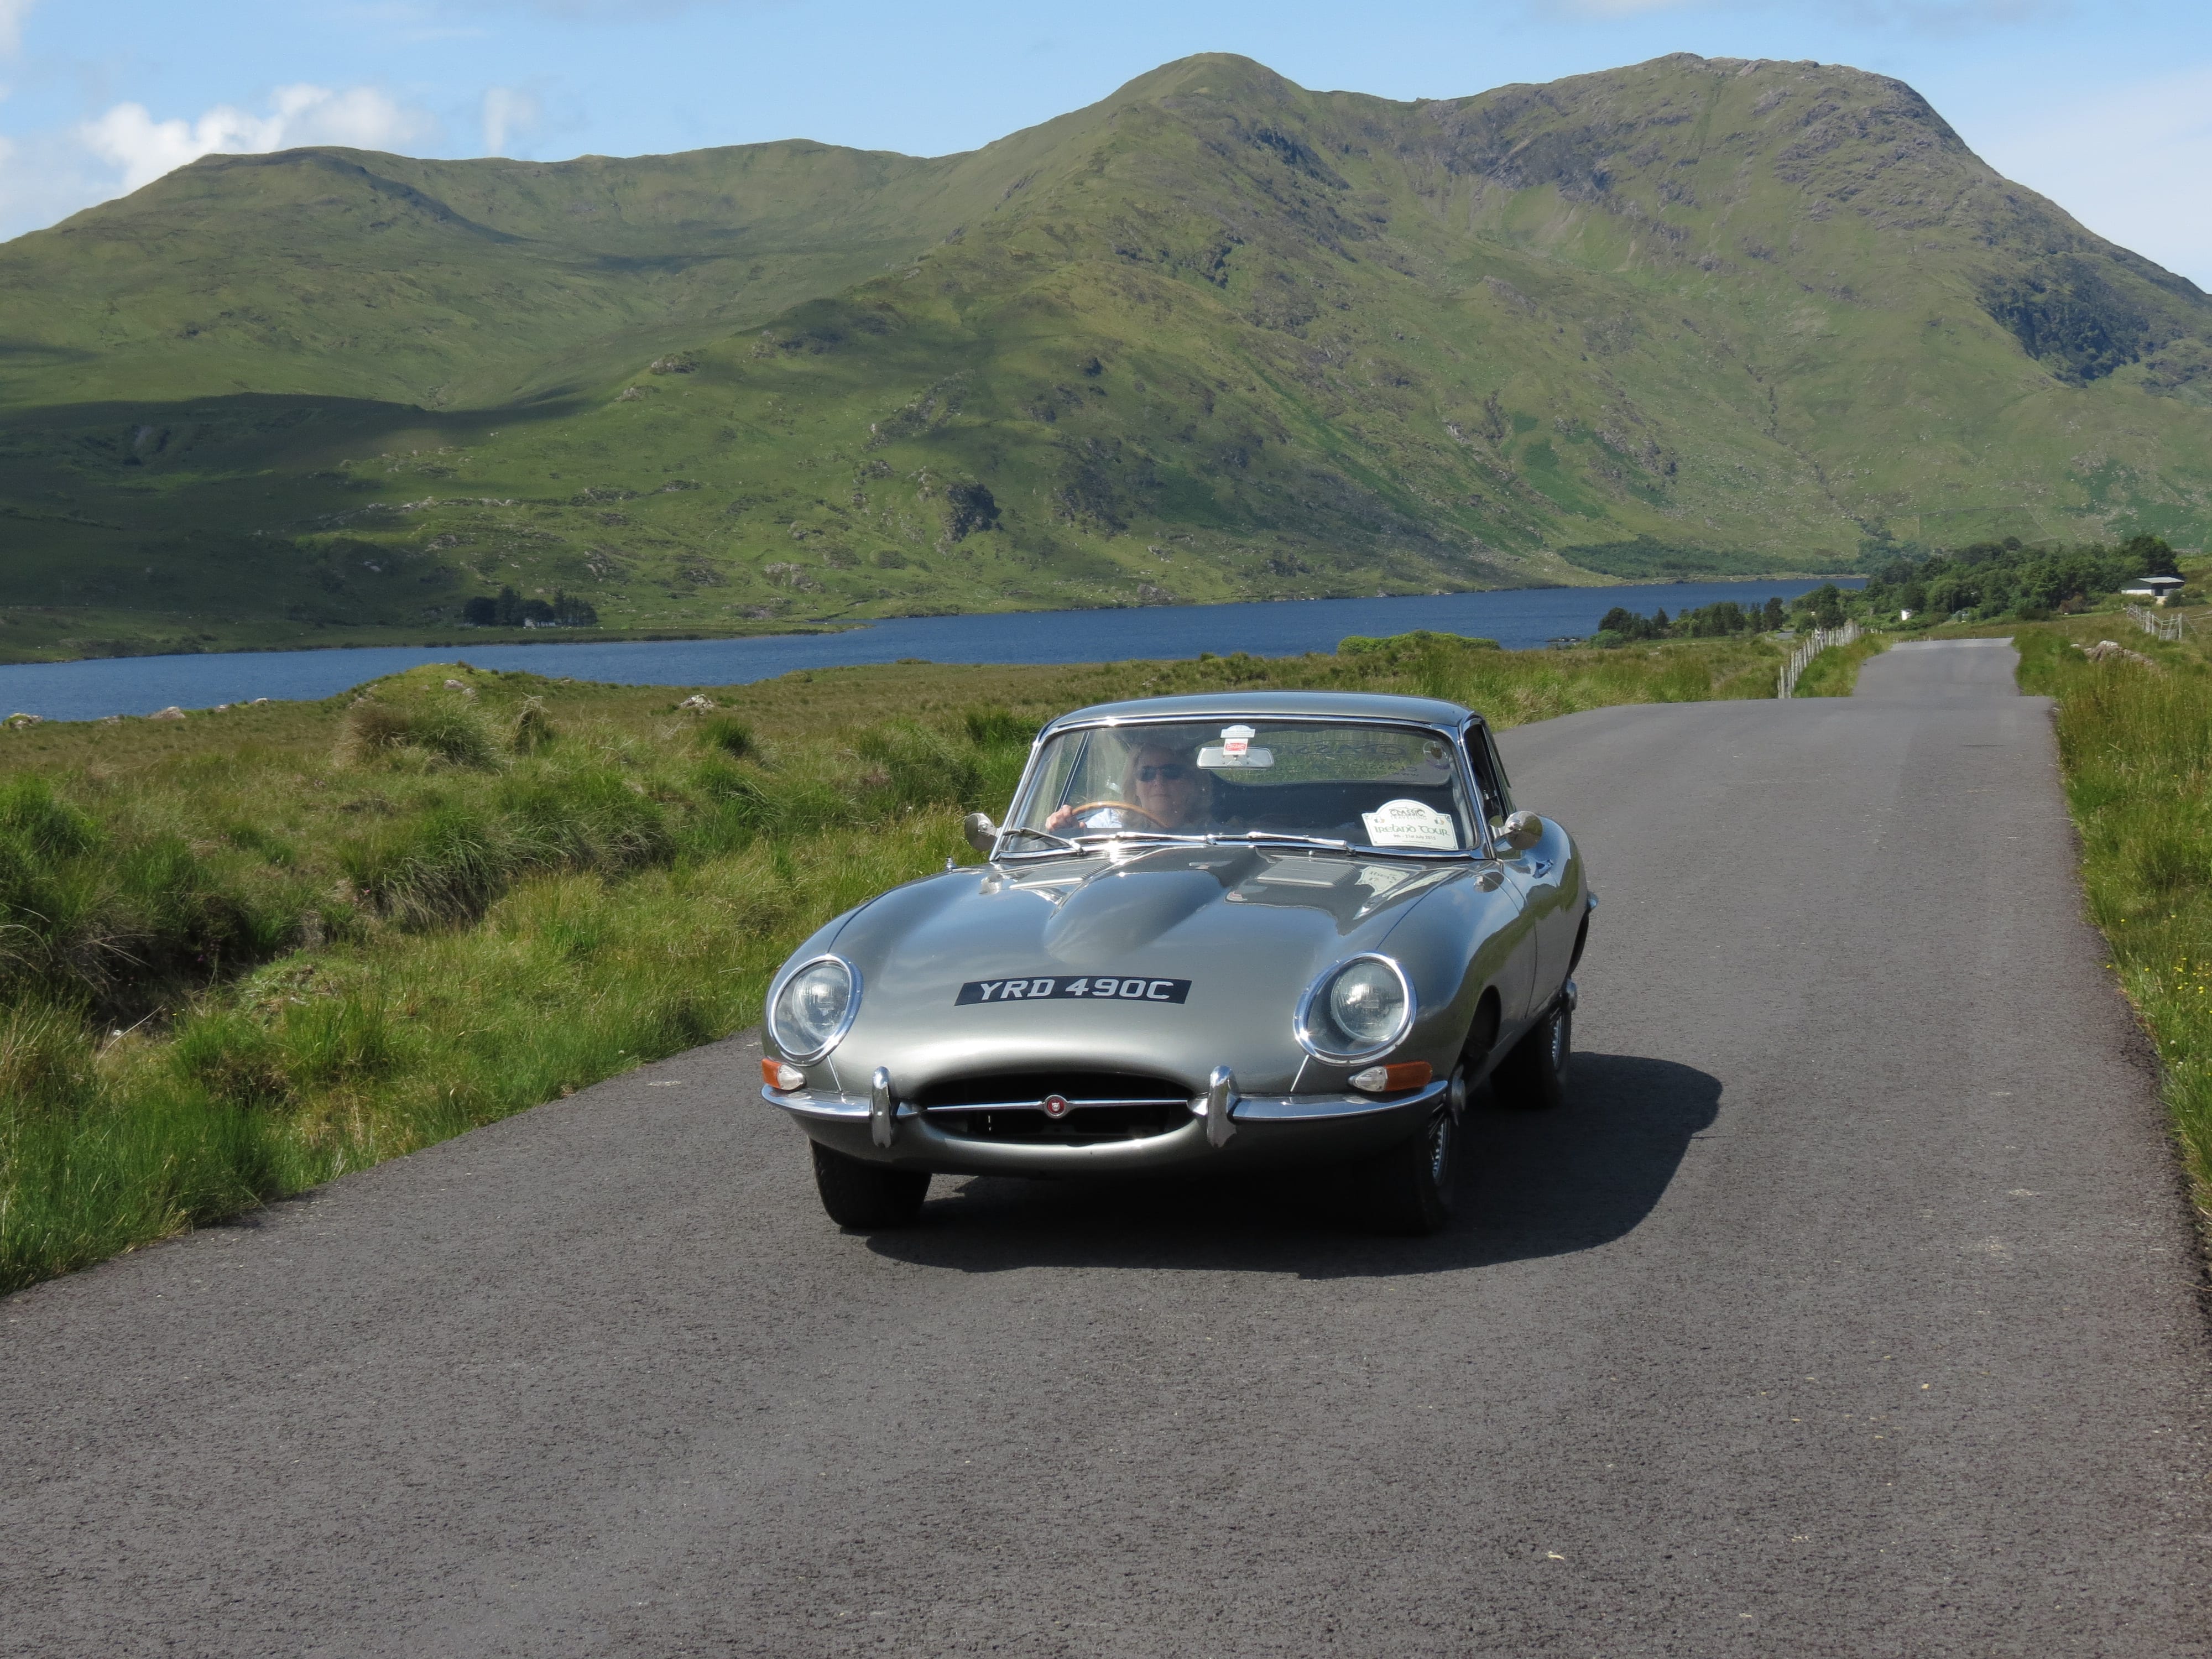 Jaguar E-type on Classic Travelling's Ireland Tour